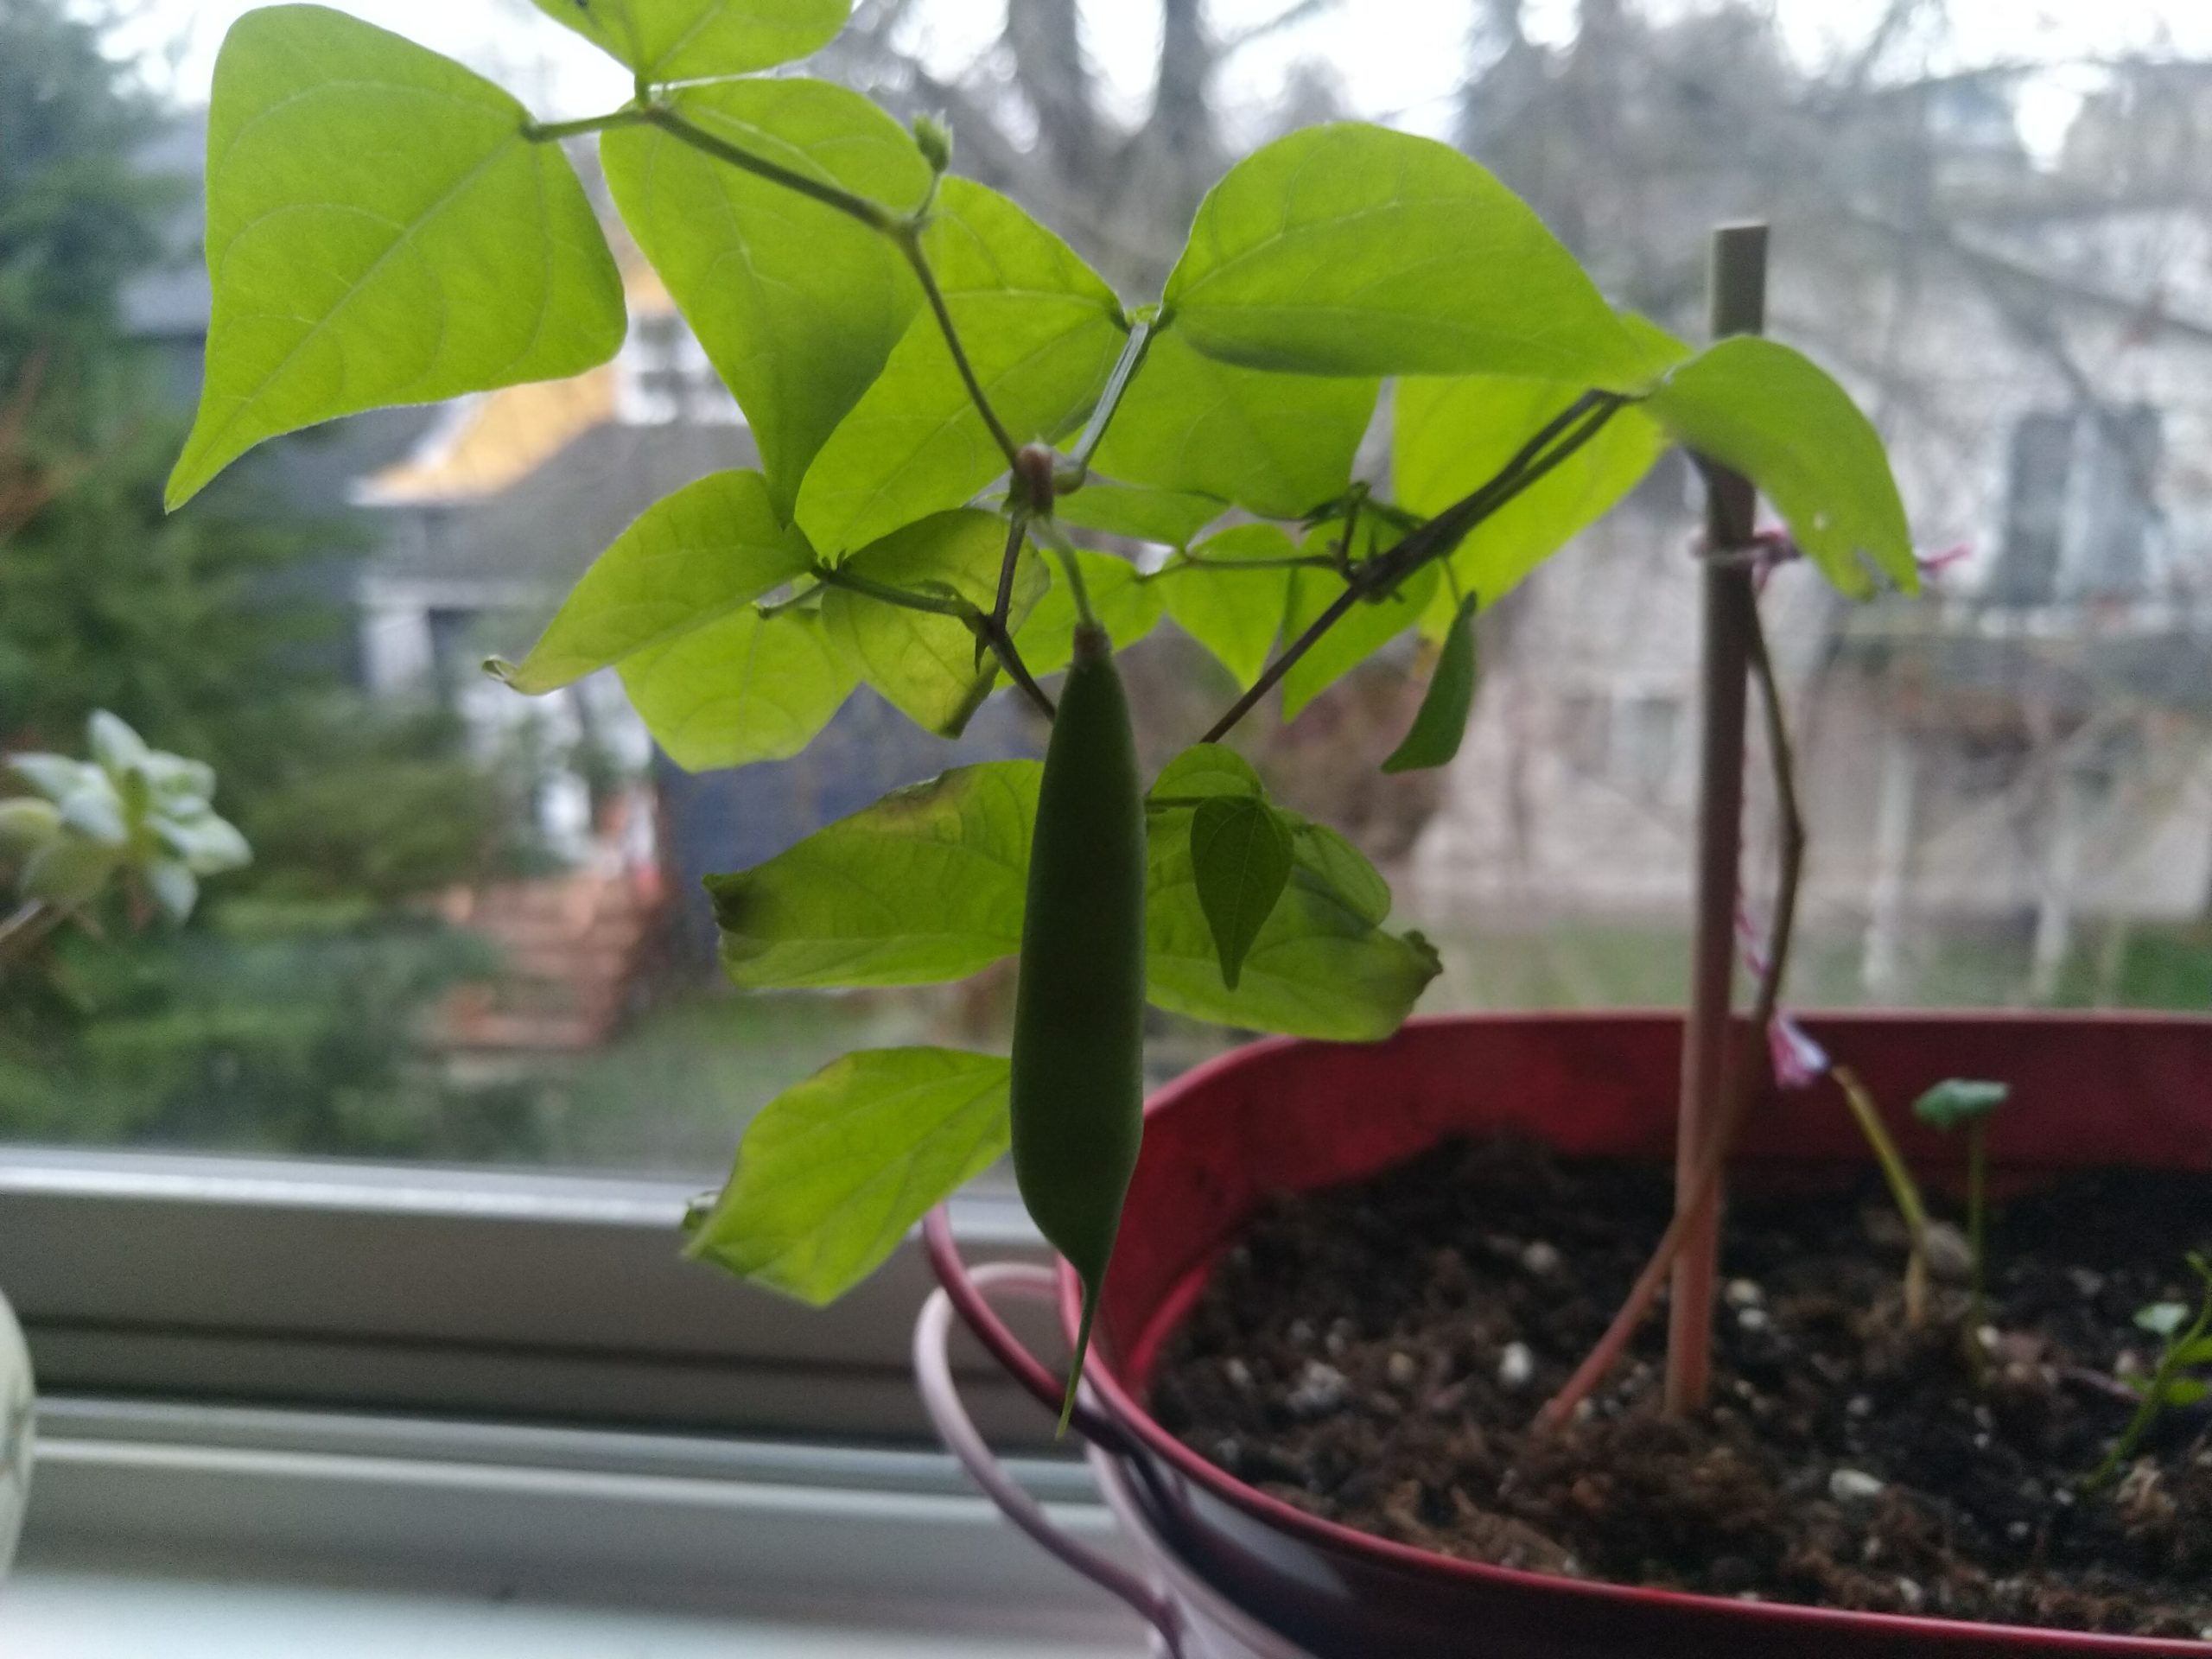 Image description: A close-up photo of a bean pod growing on a bean plant